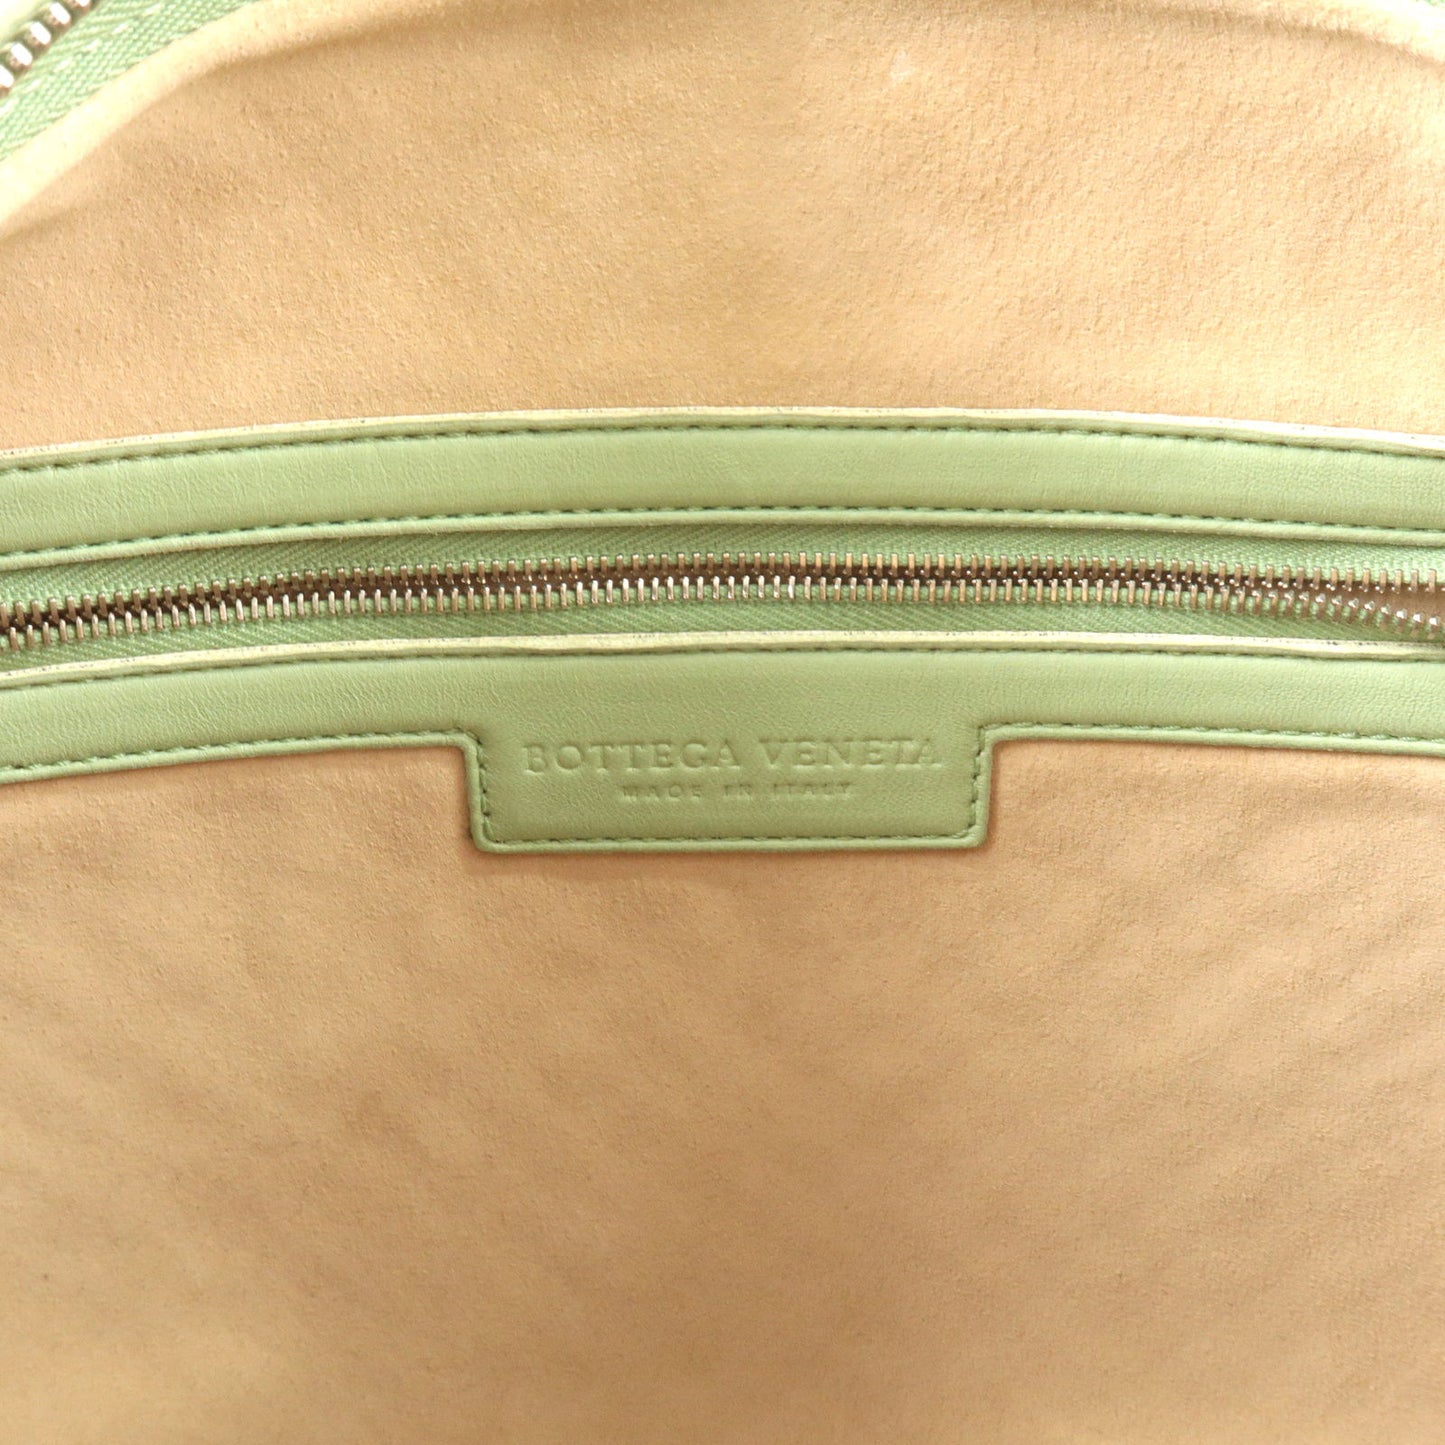 BOTTEGA-VENETA-Intrecciato-Leather-Shoulder-Bag-Green-115653